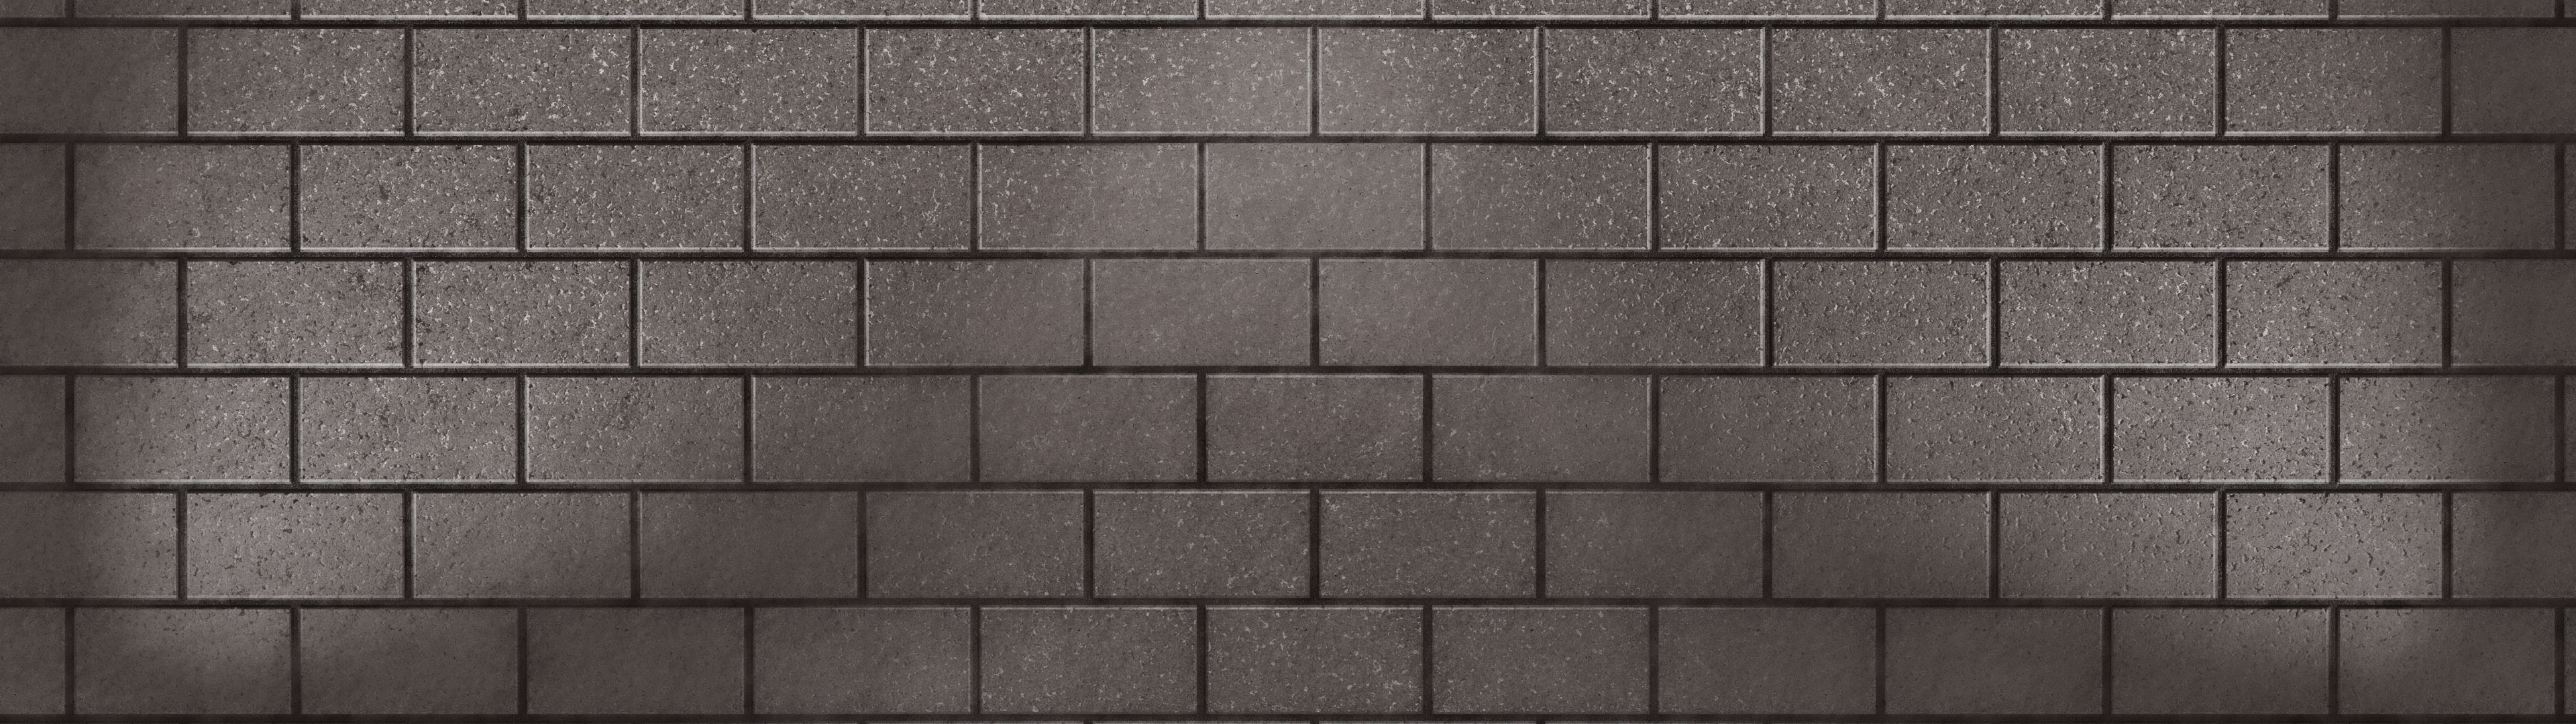 gray, textures, bricks - desktop wallpaper